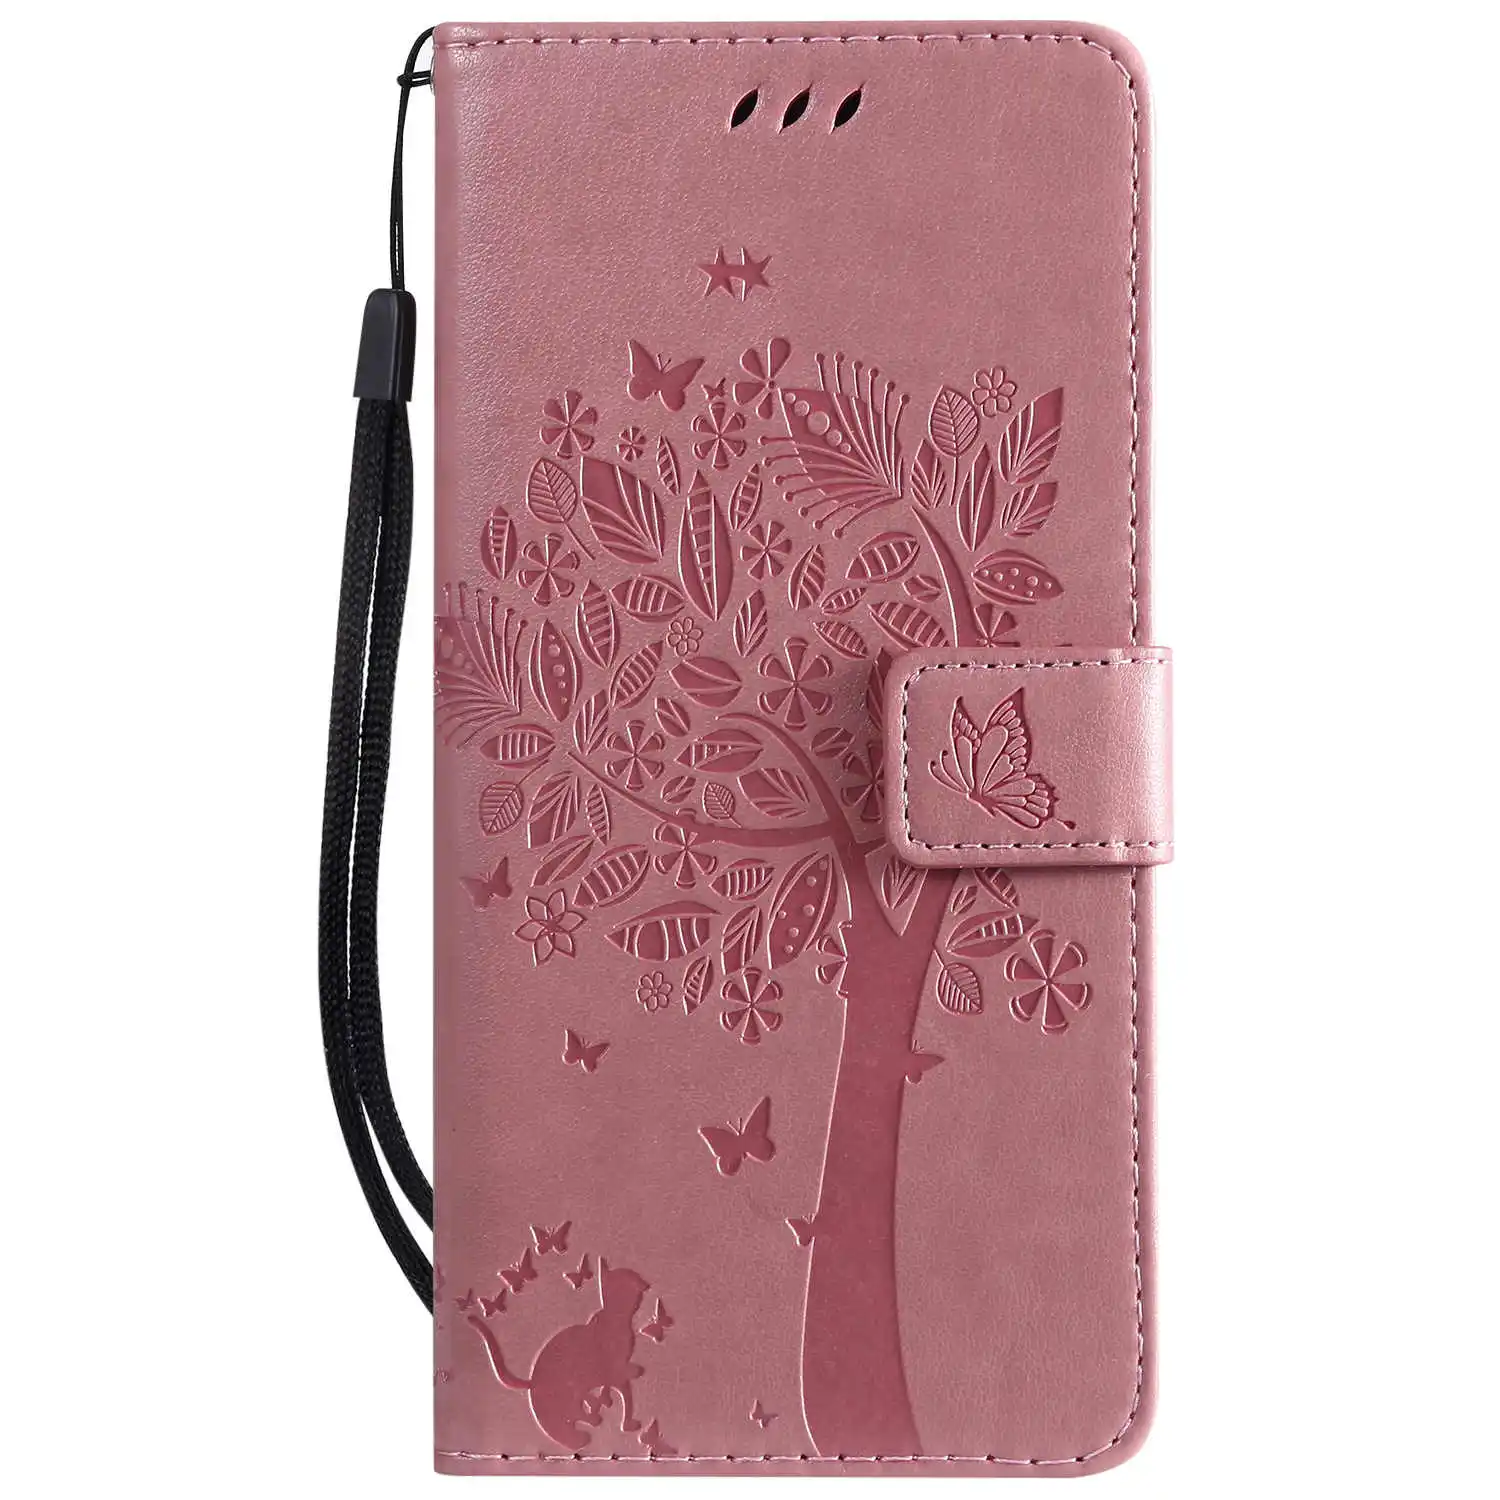 Чехол-кошелек для Xiao mi 5 5X mi 6 8 Lite Pocophone F1 Play mi x 2 для Xiao mi Red mi 3S 6 Pro Note 3 4X5 6 Pro 7 - Цвет: Pink